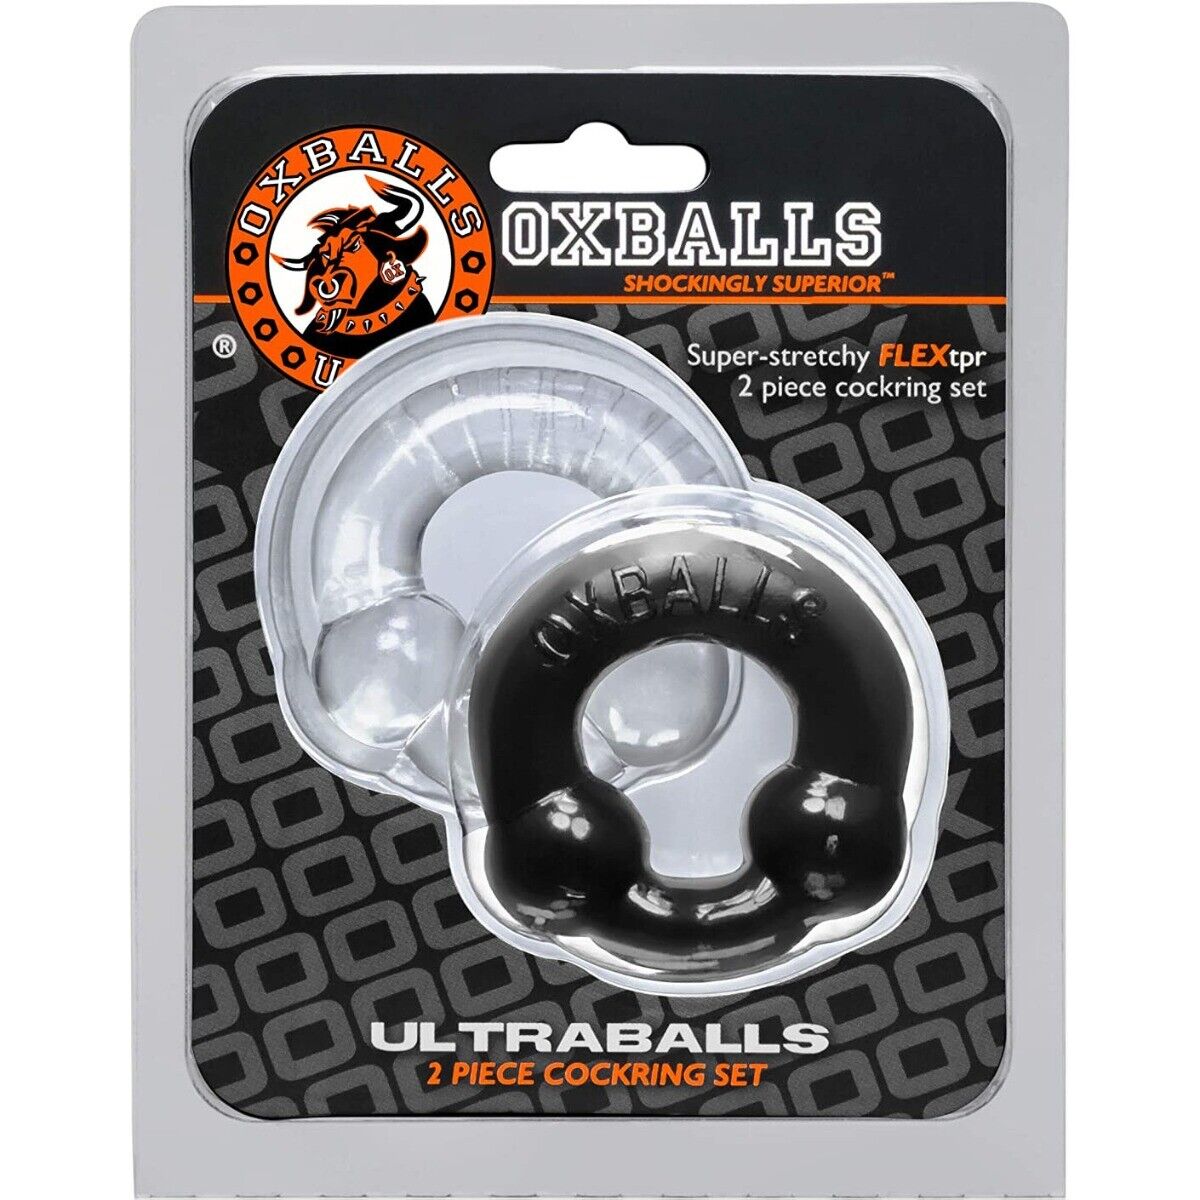 Oxballs Ultra Balls Cock Ring Penis Erection Enhancer Prolong Delay Sex Toy